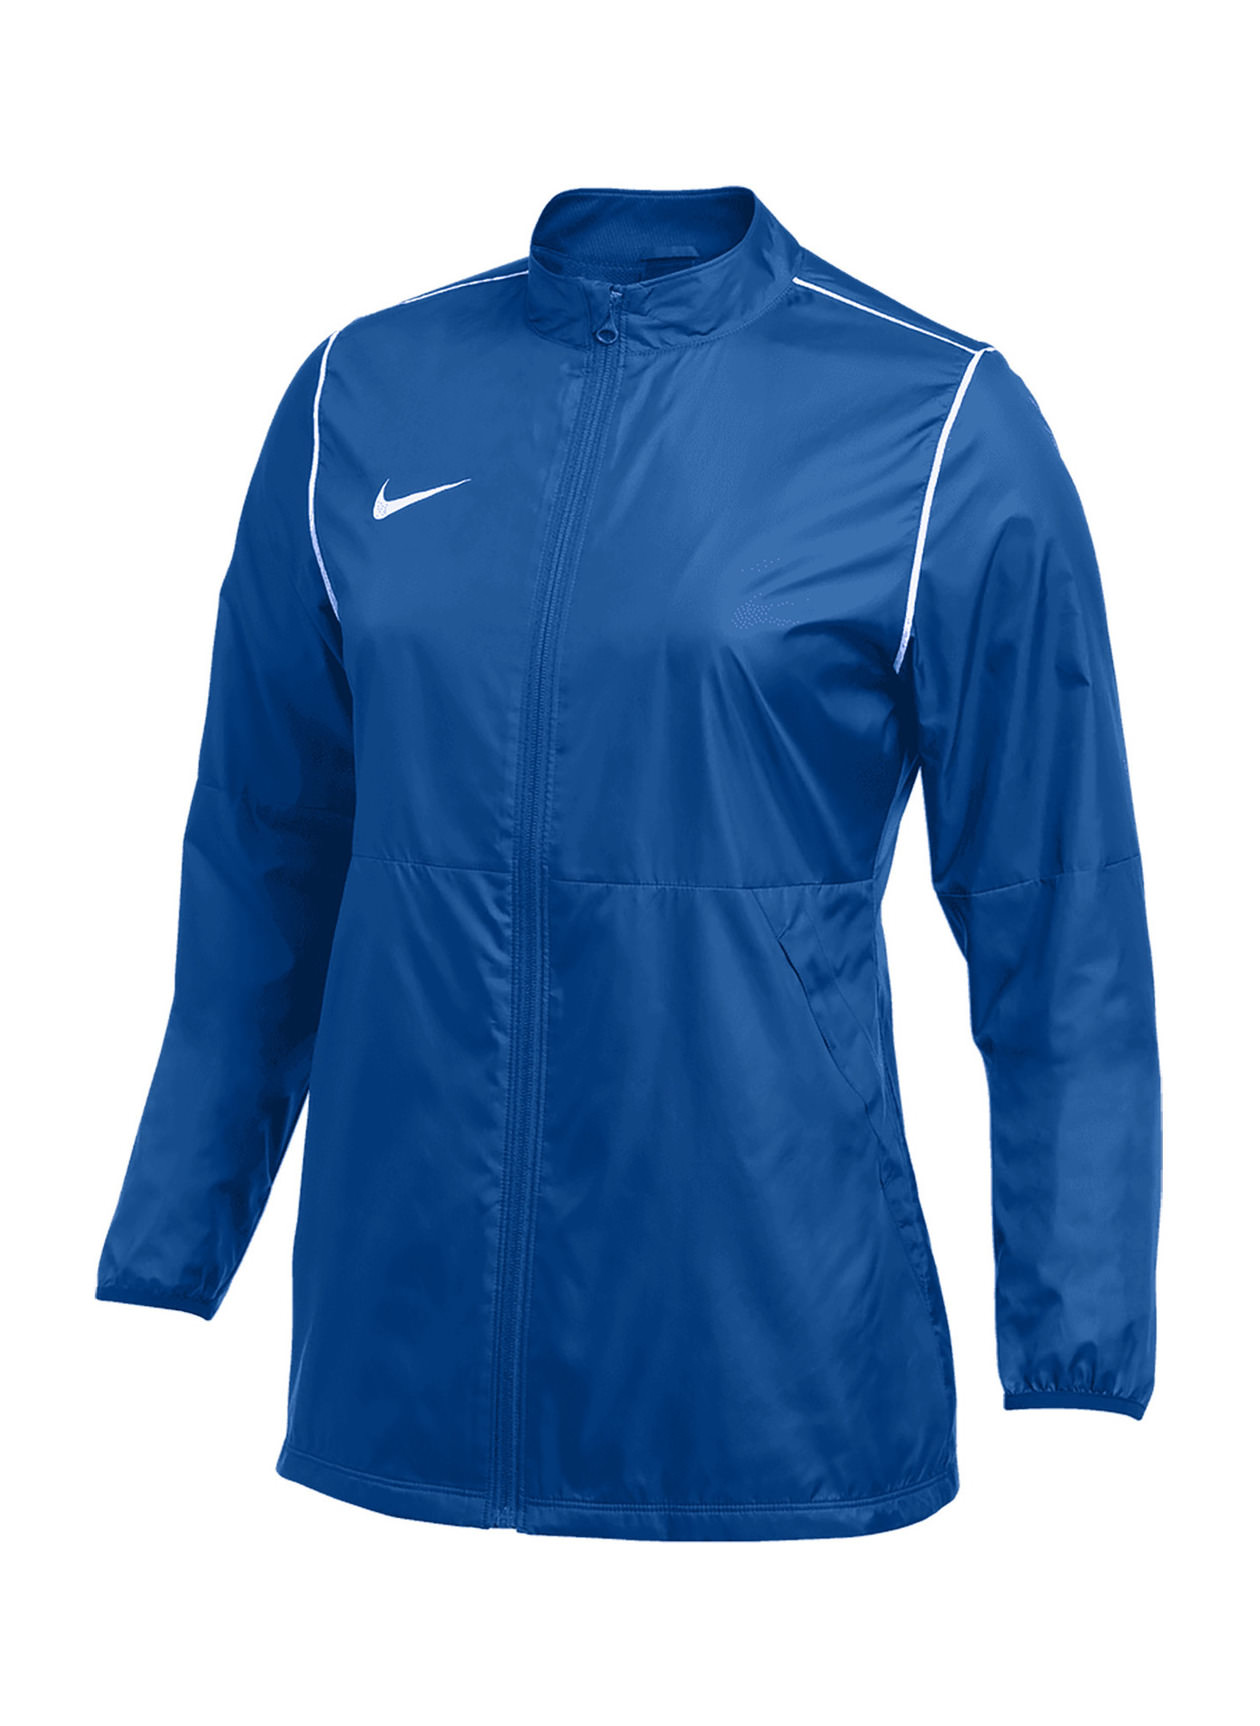 Nike Women's Royal Blue / White / White Park20 Jacket